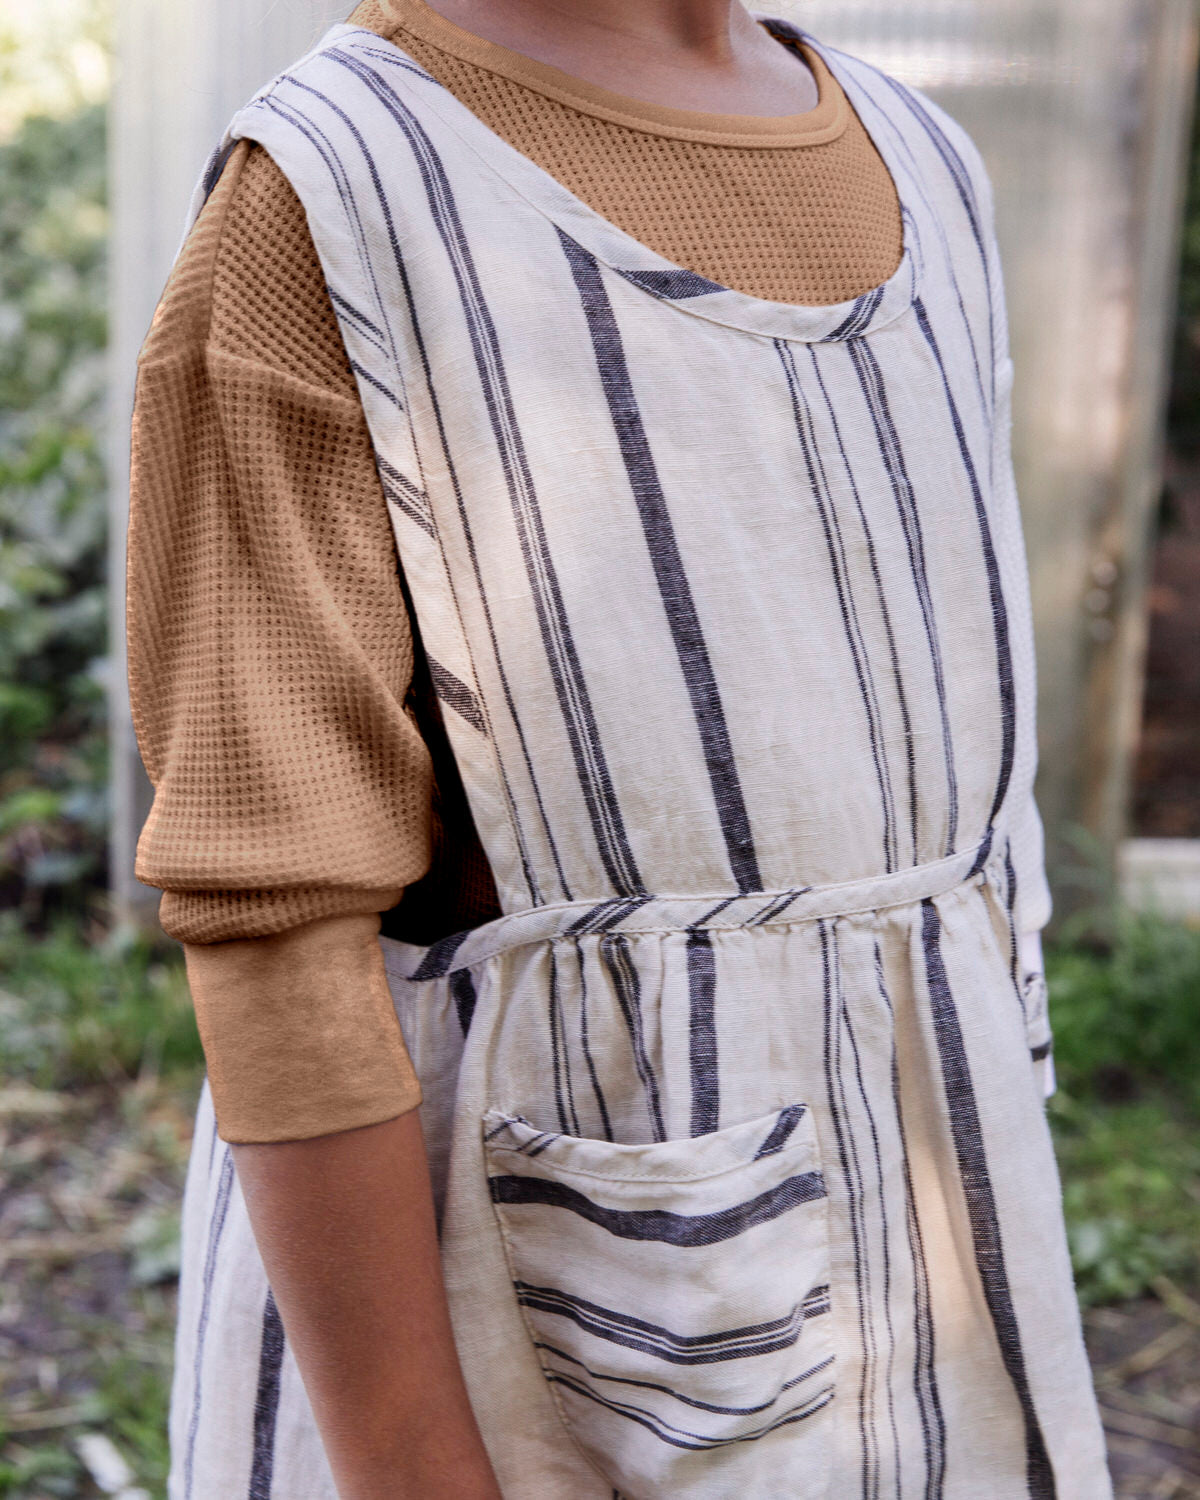 Nora Pinafore Dress Beige & Striped Dresses Matona 